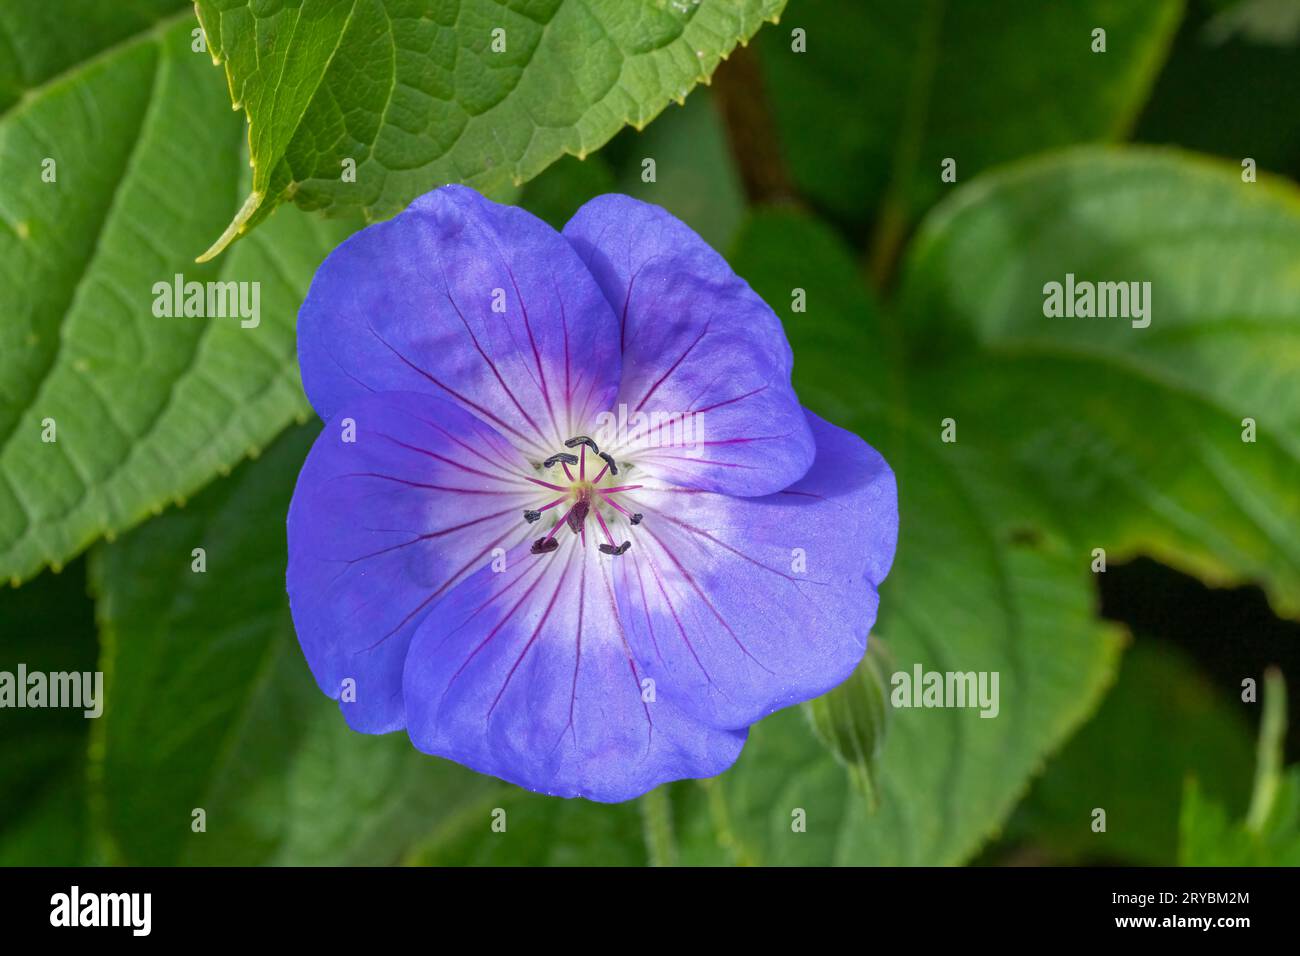 A close up of a wild Geranium flower, also known as Cranesbill Stock Photo